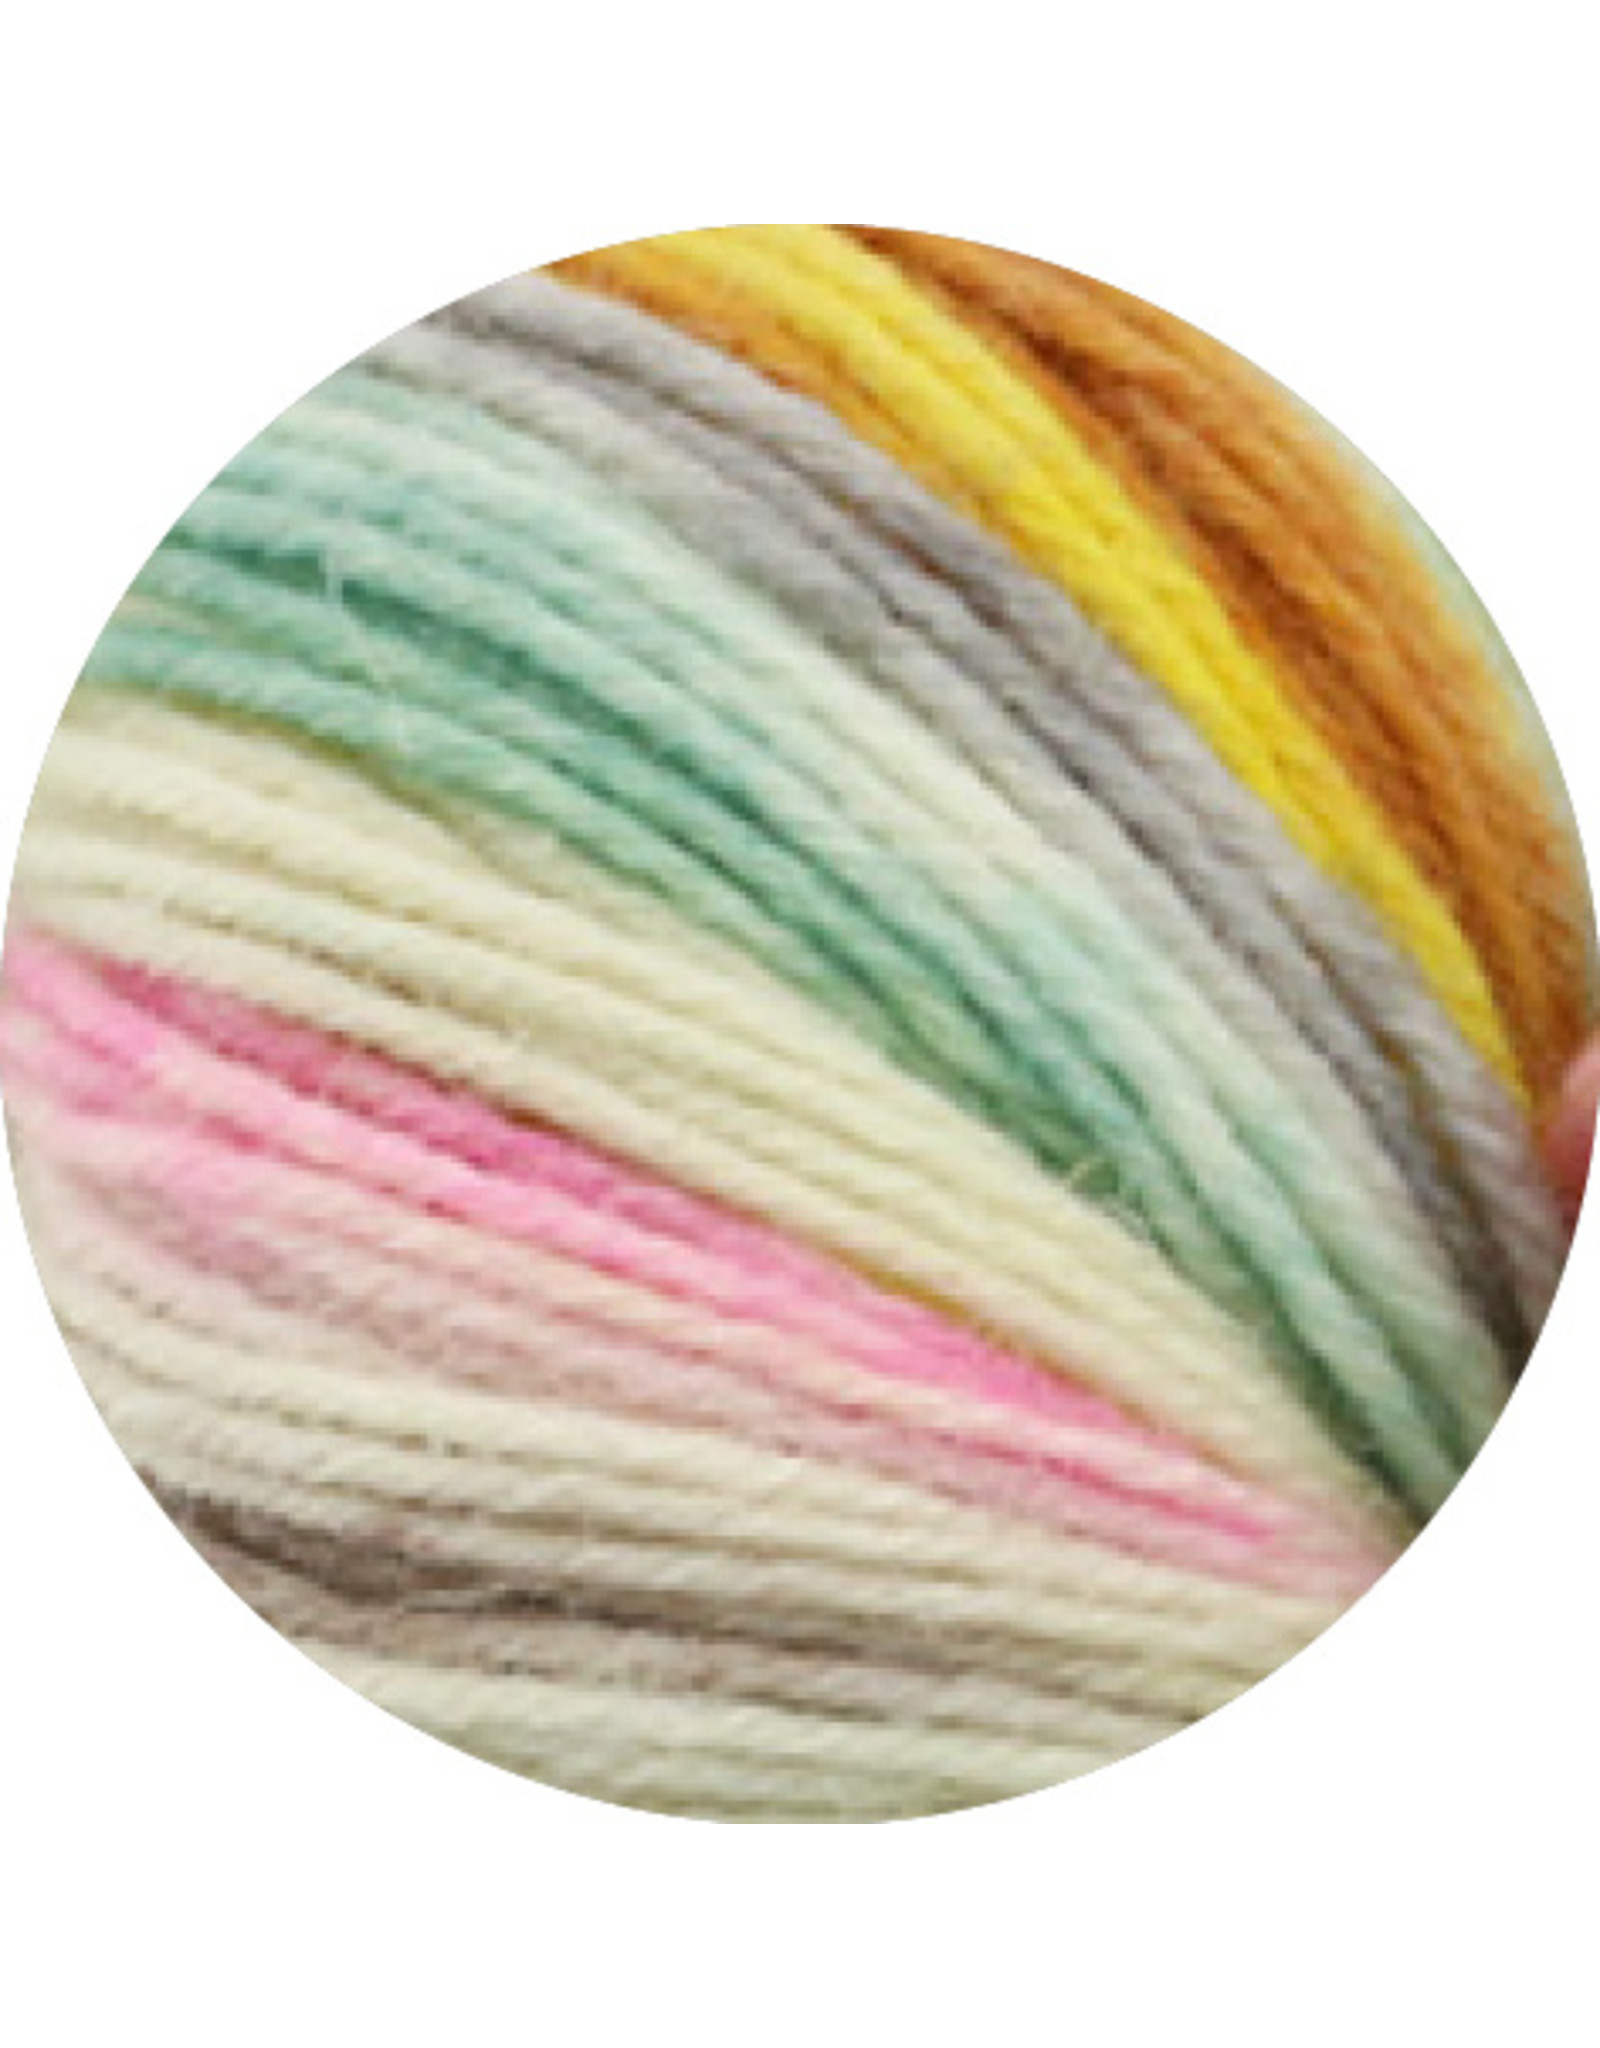 Lana Grossa Lana Grossa Meilenweit Merino Rainbow Hand-dyed 7007